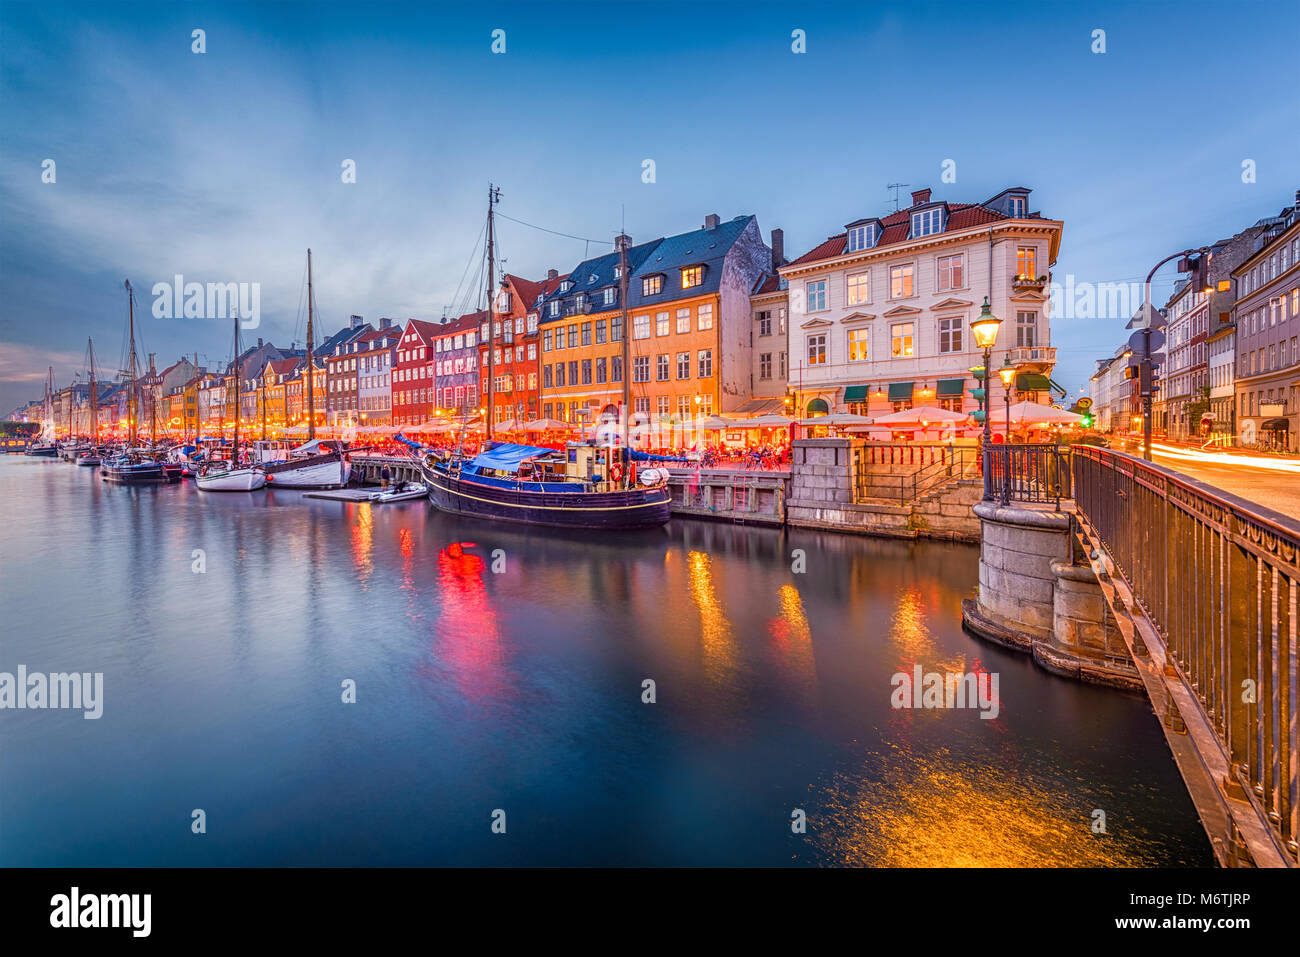 Kopenhagen, Dänemark Skyline am Nyhavn Kanal in der Dämmerung. Stockfoto